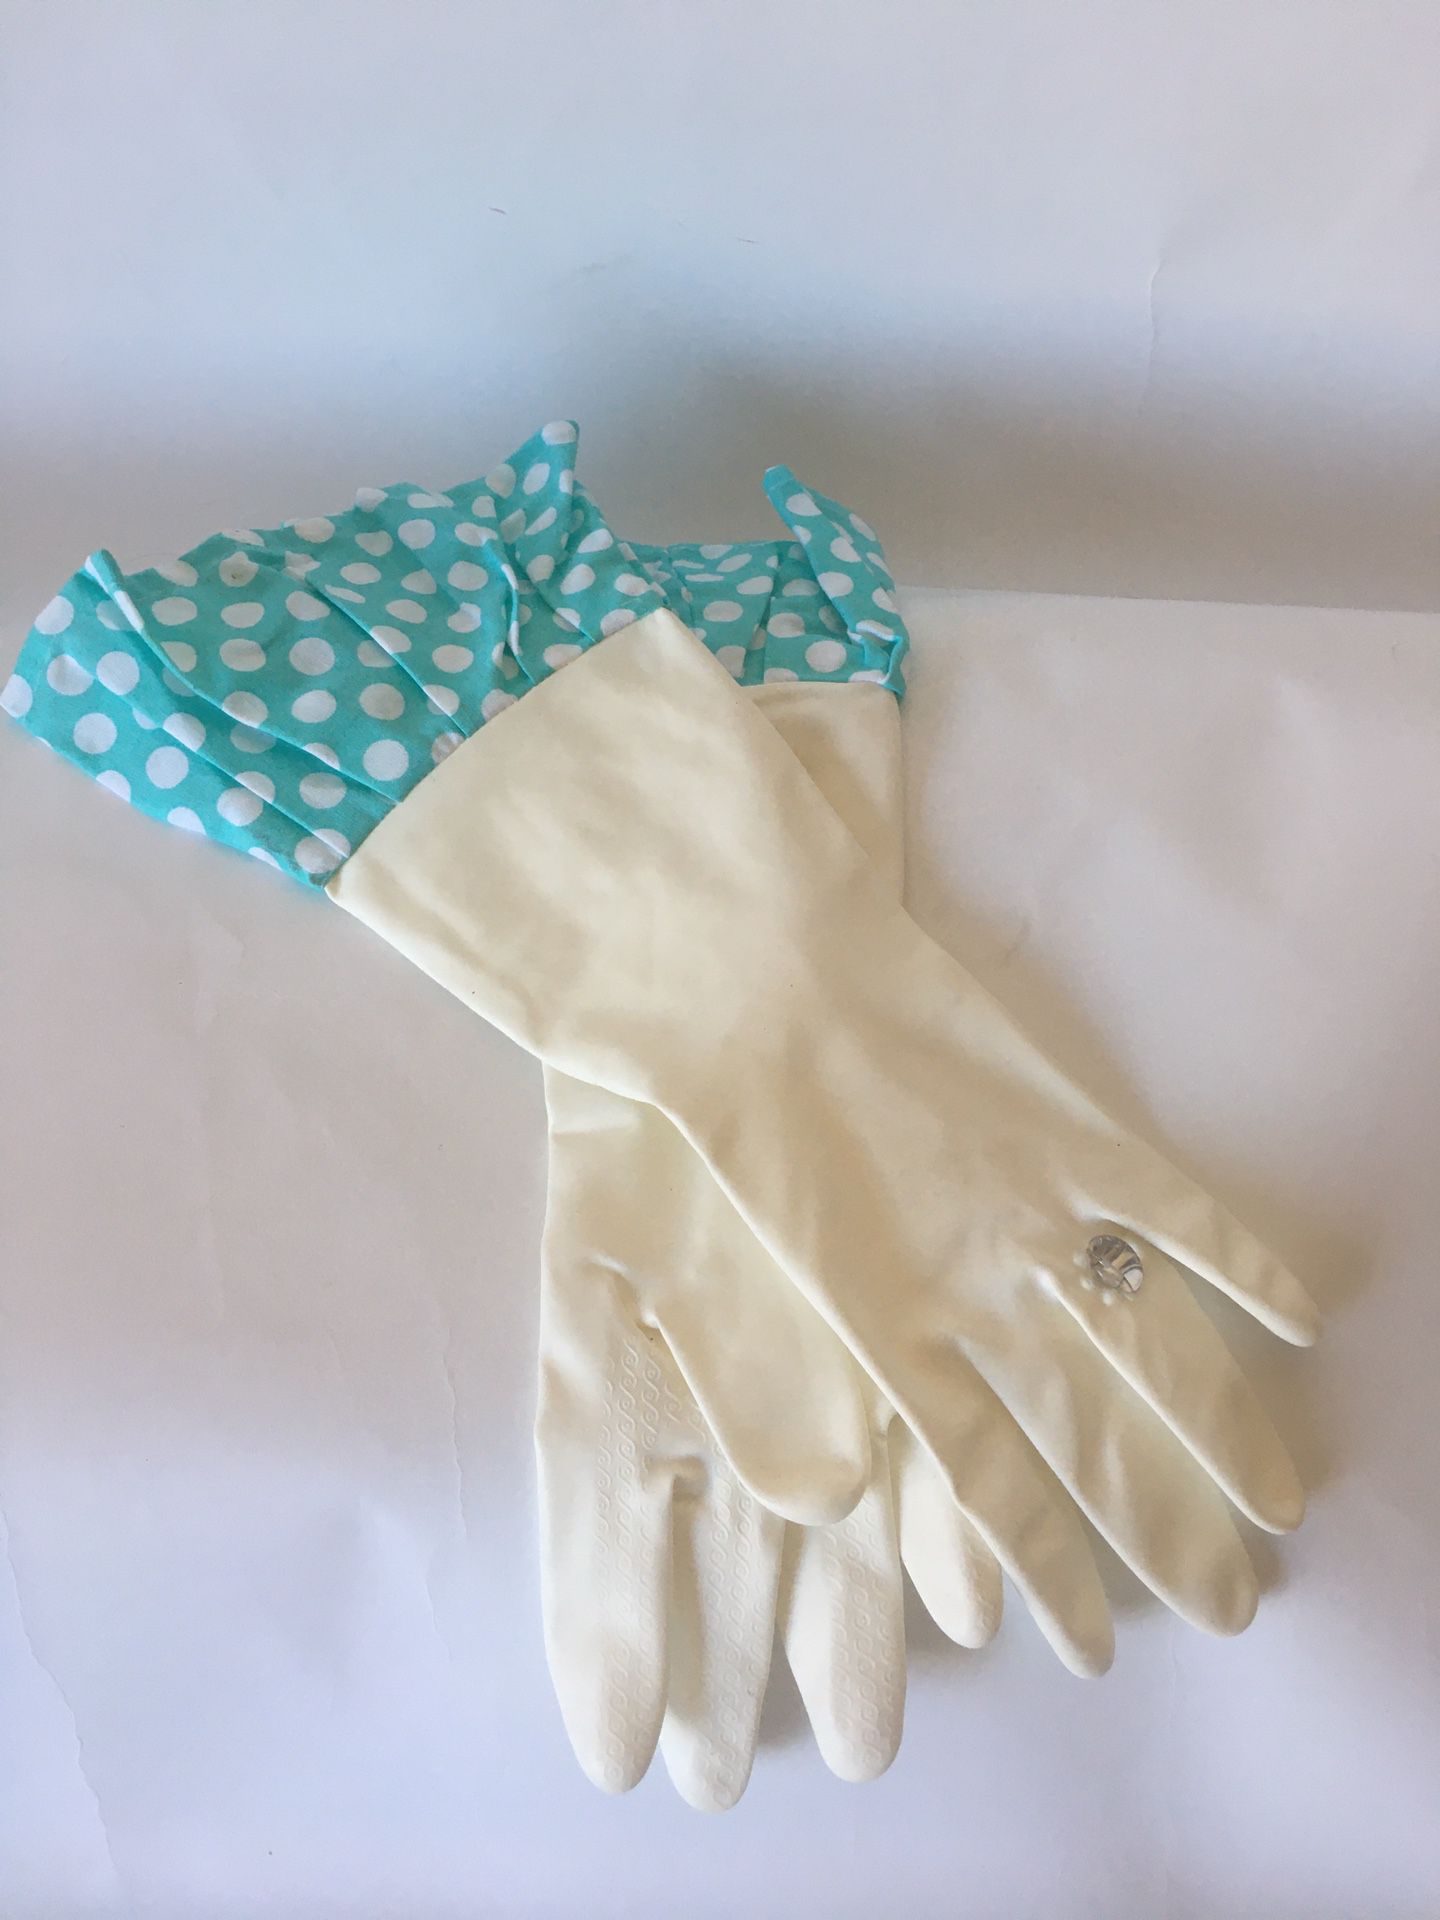 Dish Washing gloves With “Diamond” Engagement Ring